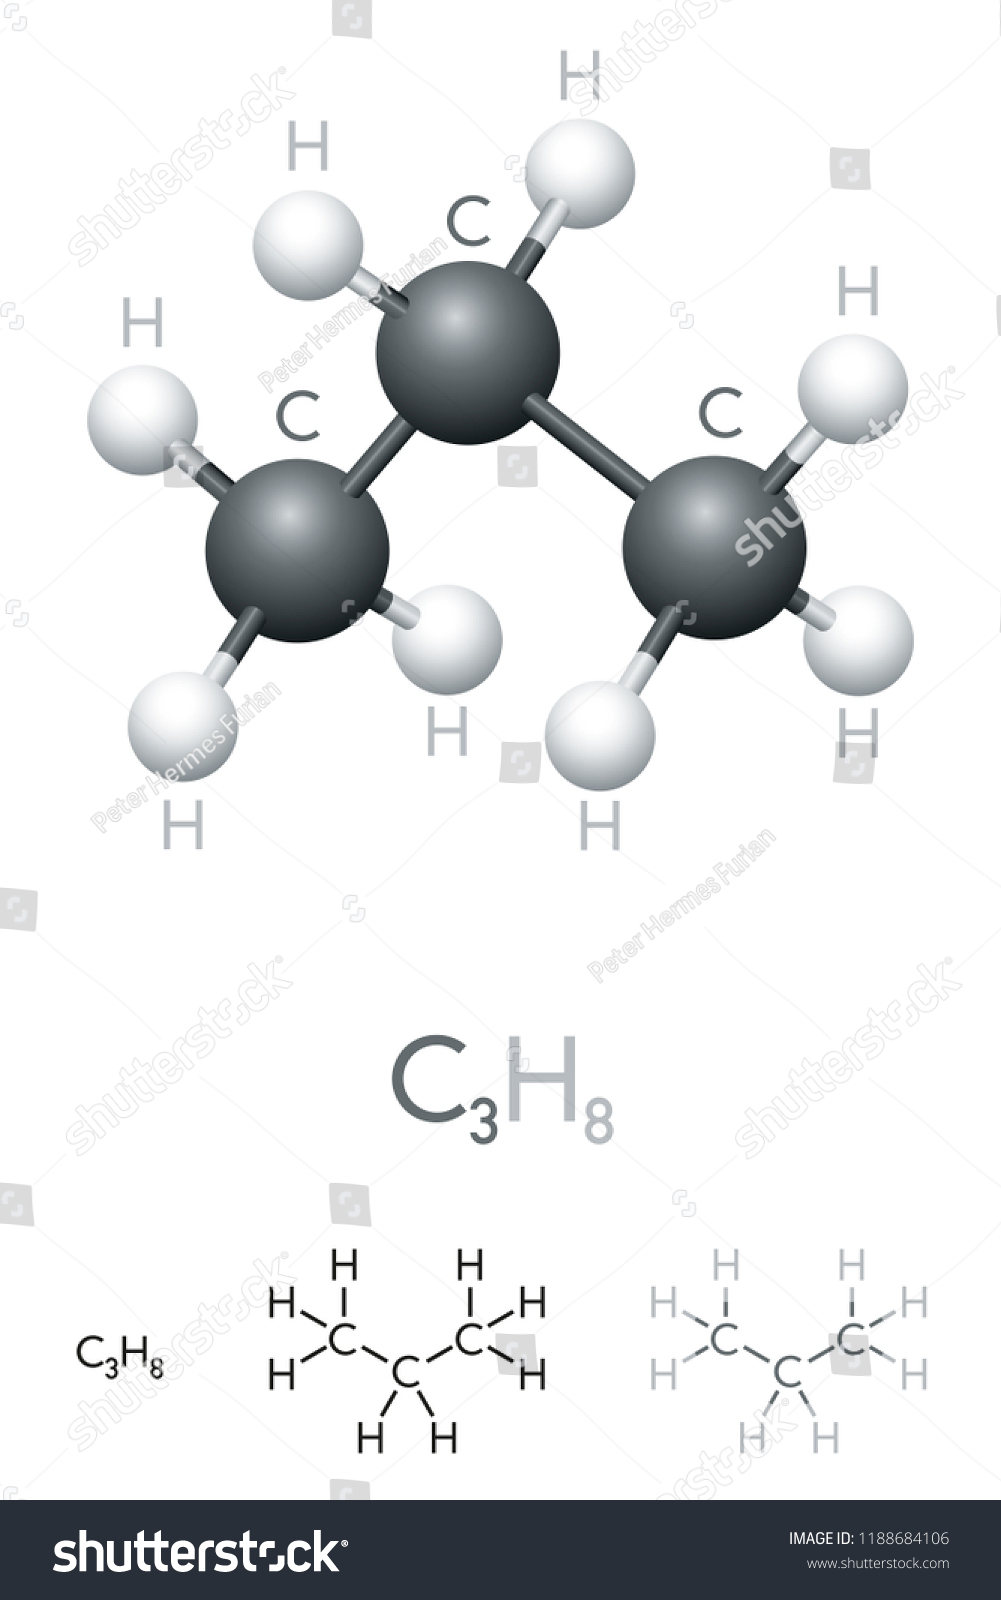 Propane C3h8 Molecule Model Chemical Formula Stock Vector (Royalty Free ...